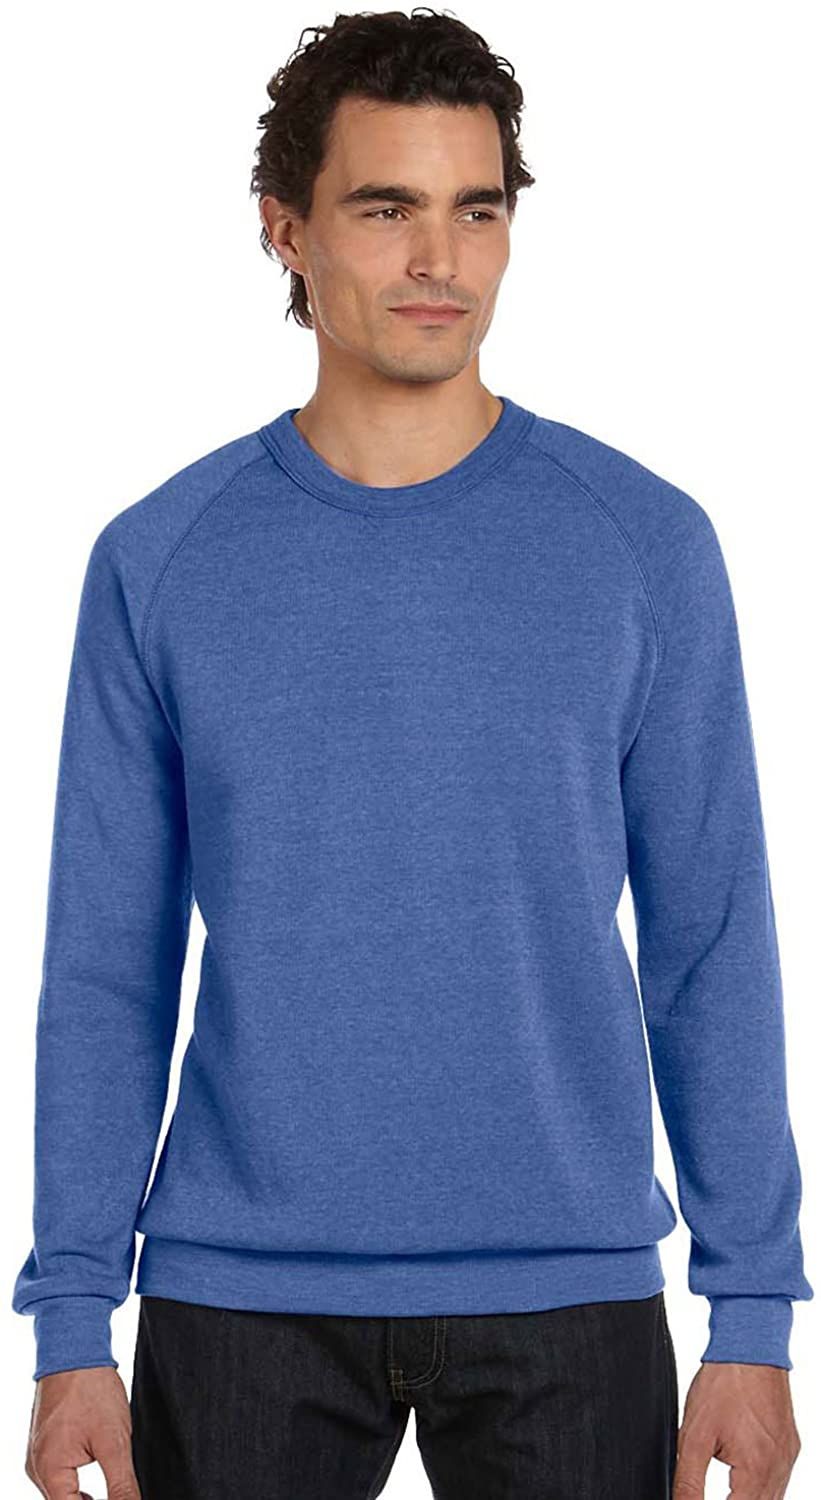 Men's Crewneck Plain Jumper Sweater Sweatshirt 